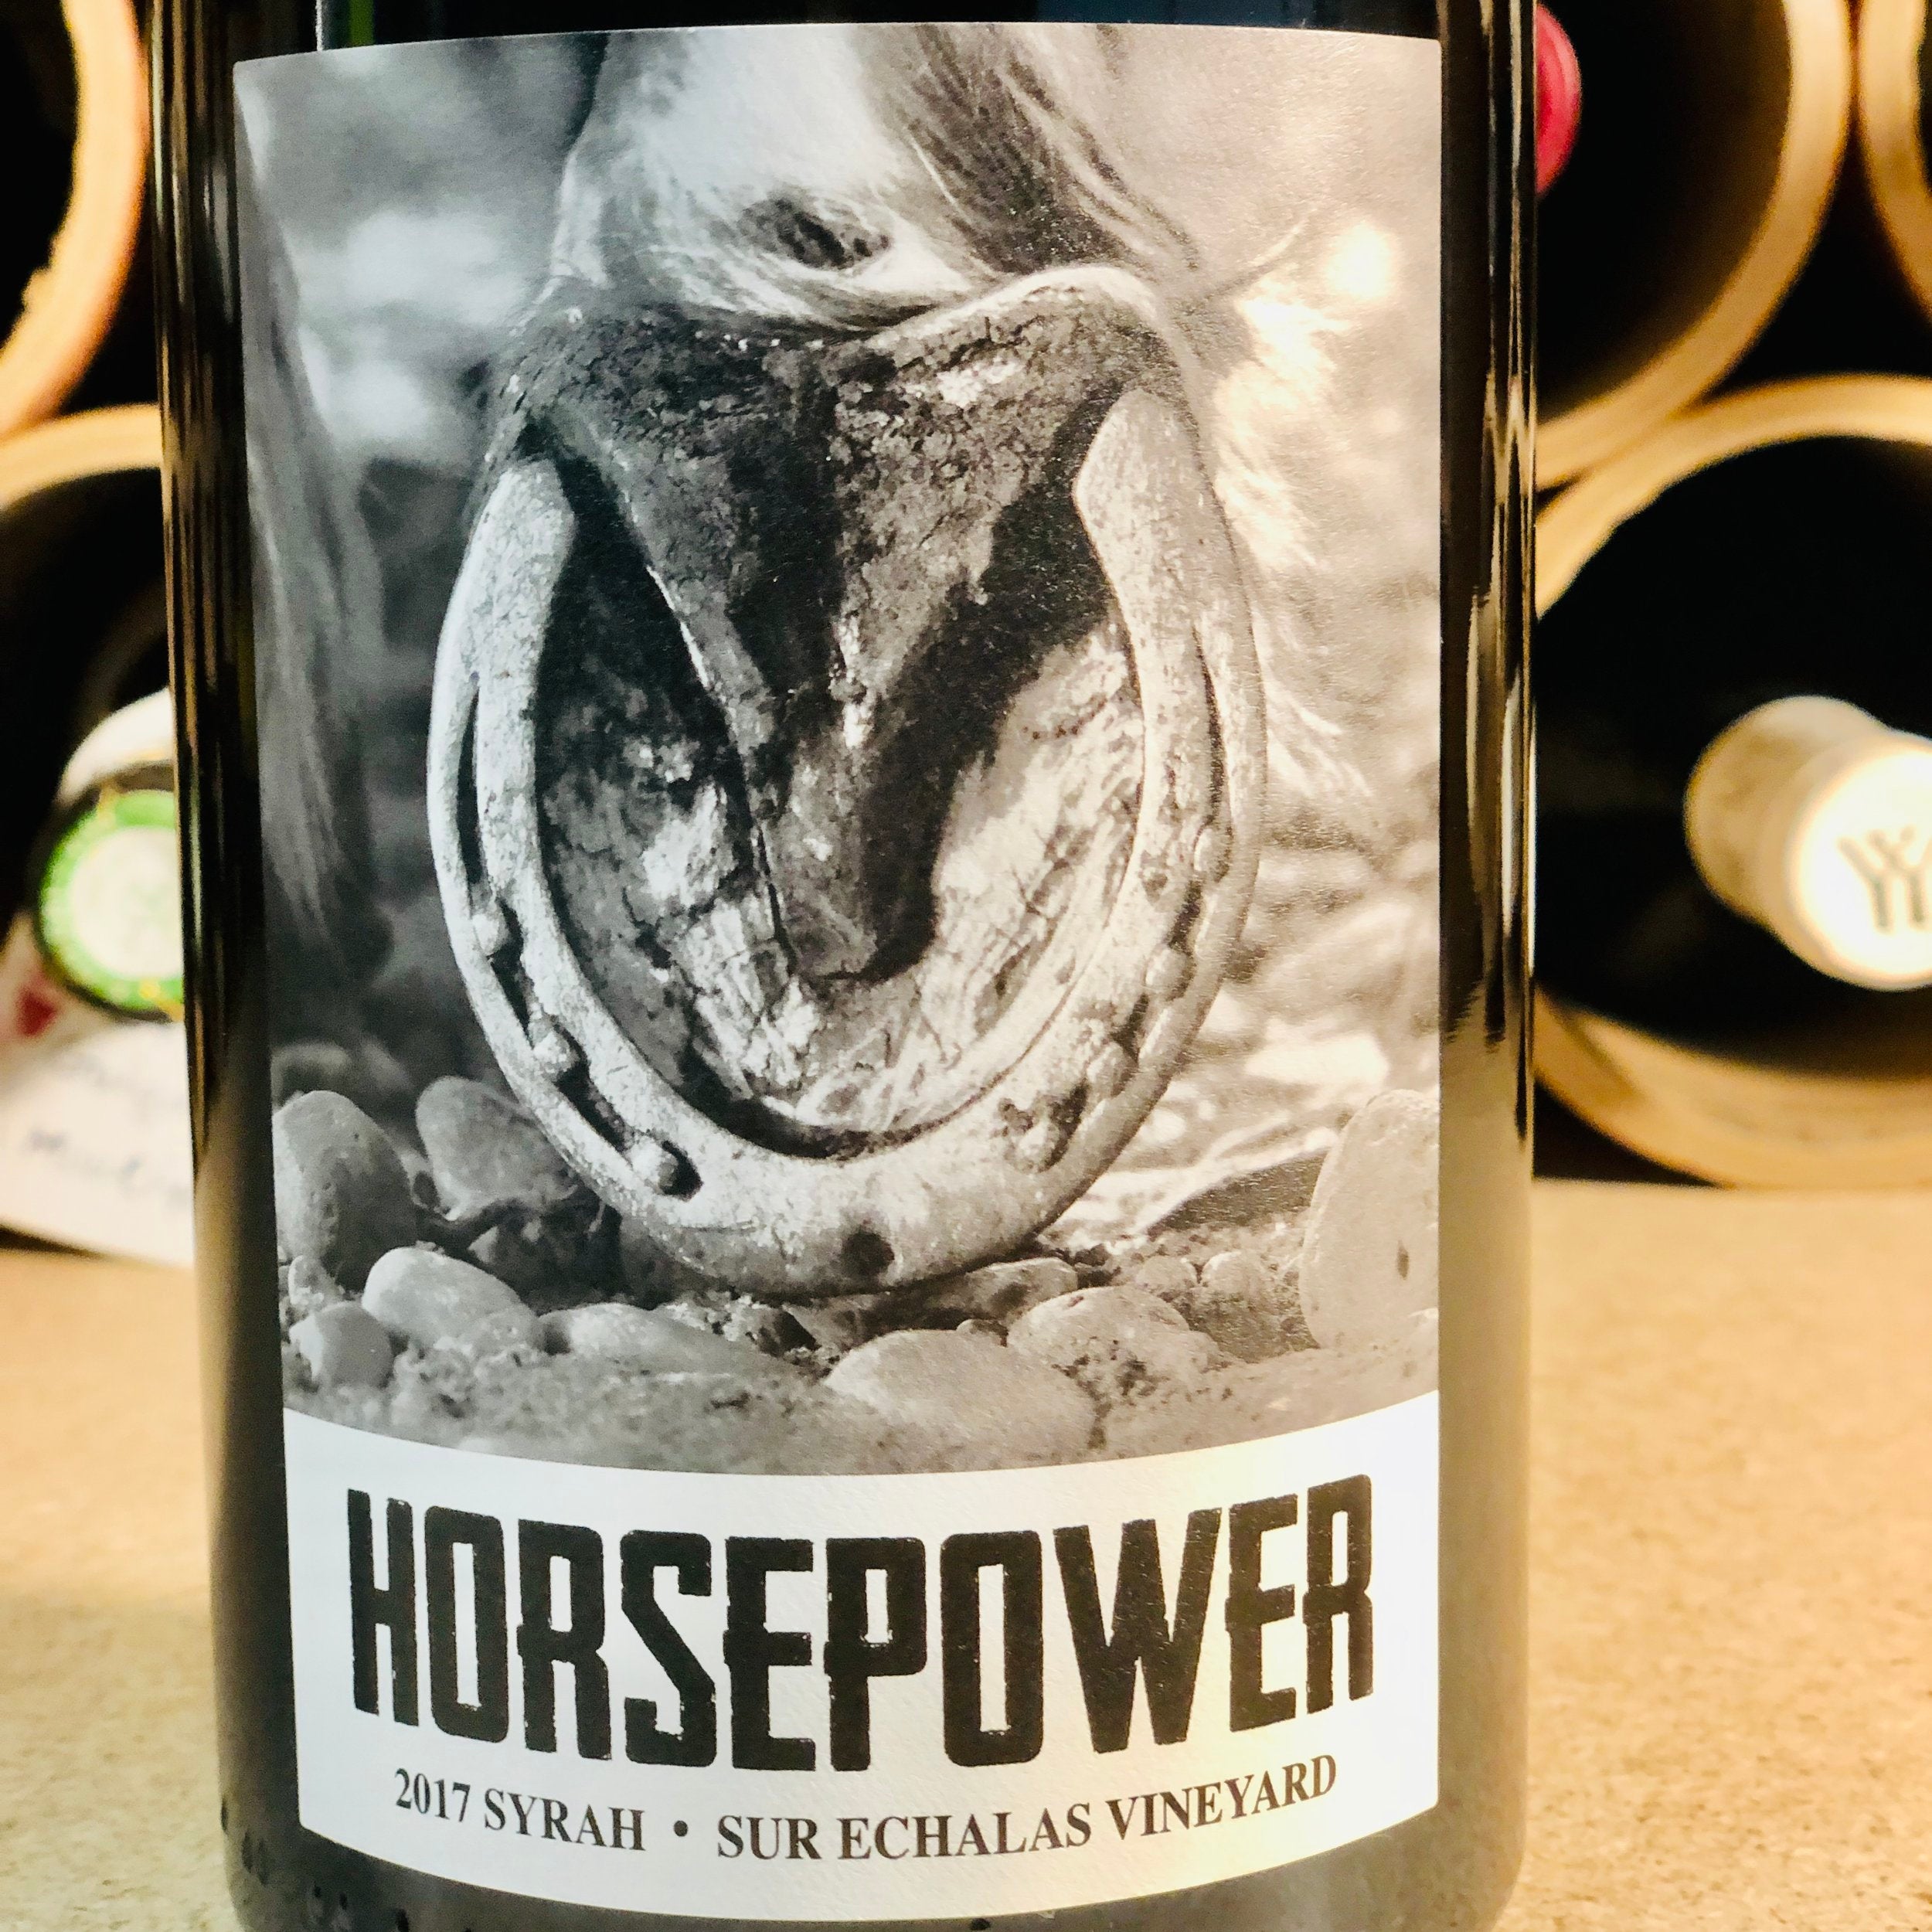 Horsepower Vineyards, Sur Echalas Vineyard, Syrah 2017